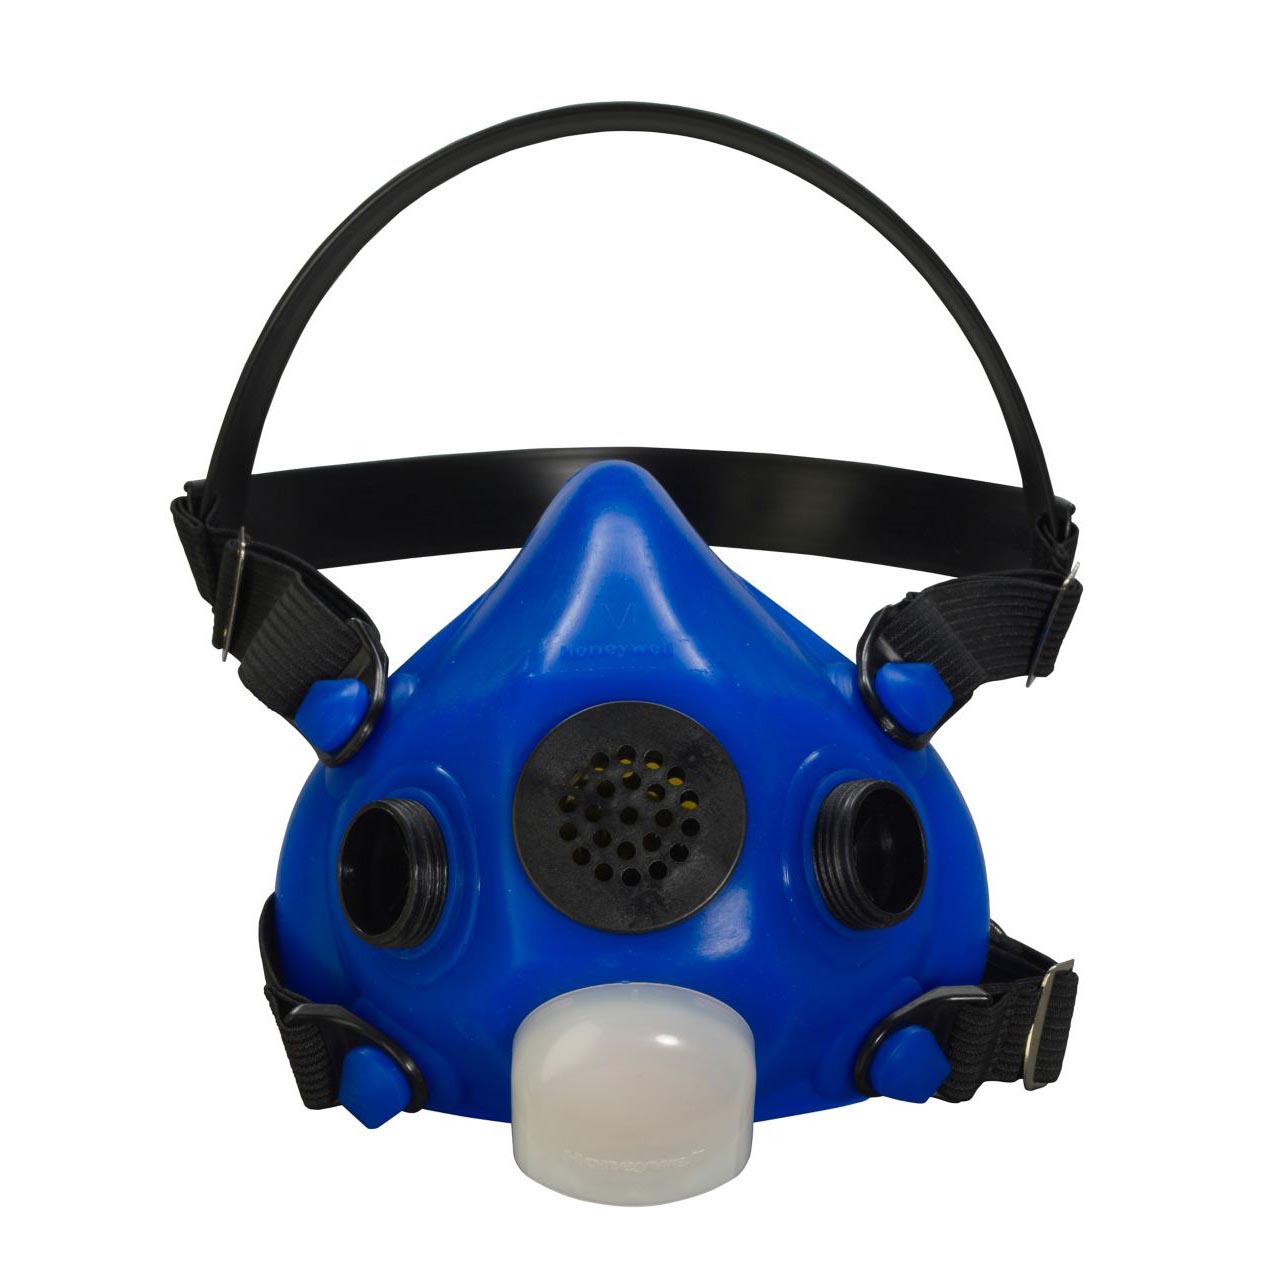 Honeywell North RU85004M Blue Half Mask Respirator with Speech Diaphragm Diverter Exhalation Cover, Medium